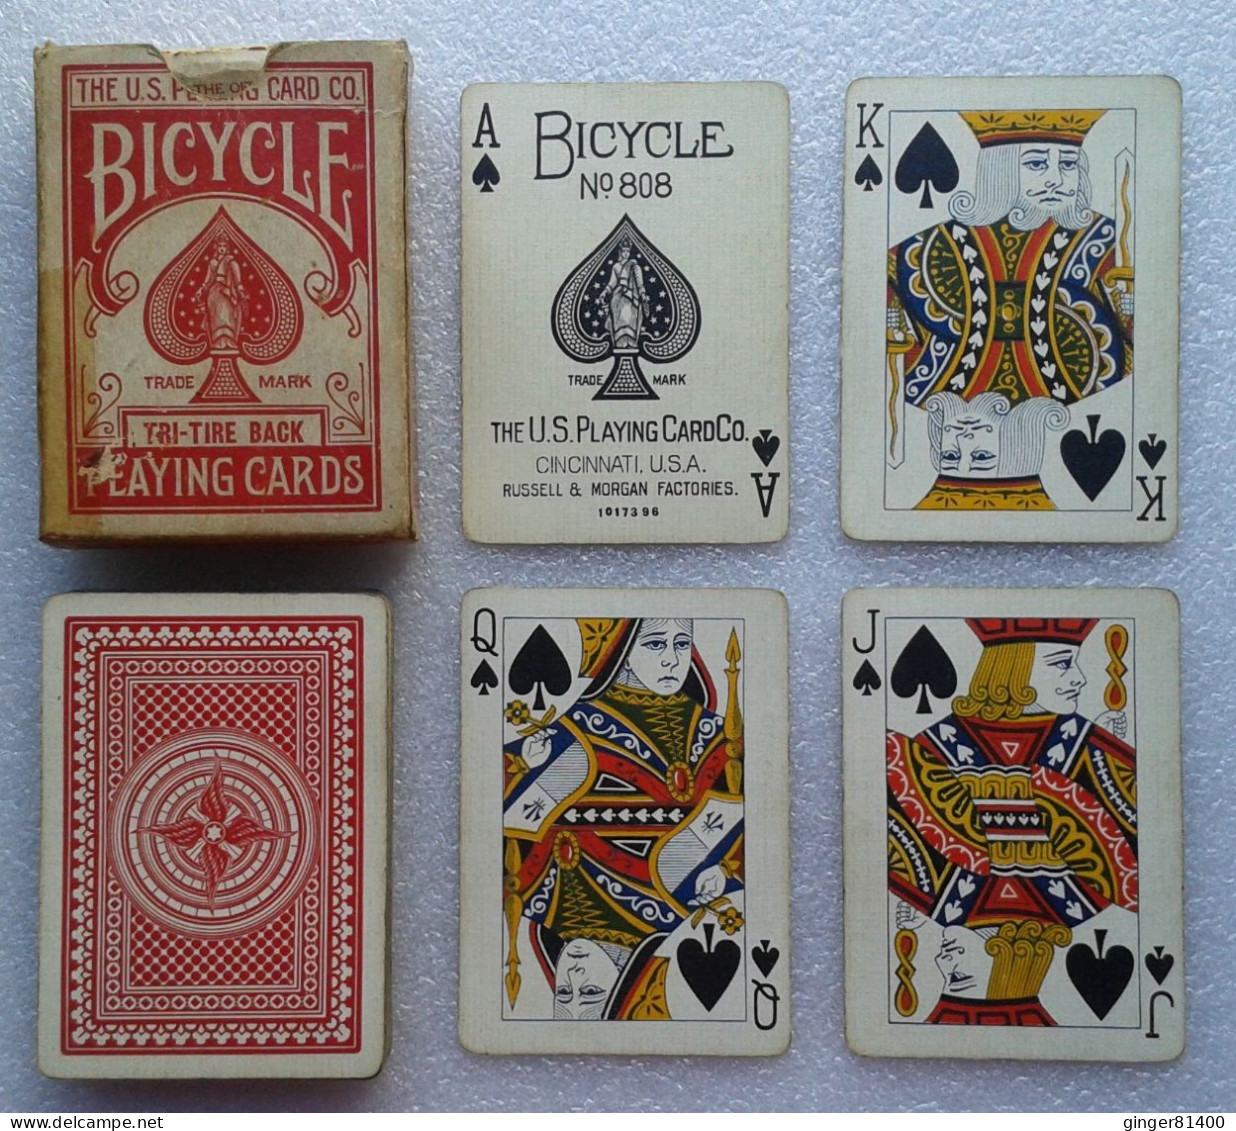 Ancien Jeu De 52 Cartes BICYCLE 808 Air CUSHION - The U.S PLAYIND CARD CO. Cincinnati U.S.A Russel & Morgan Factories - Cartes à Jouer Classiques